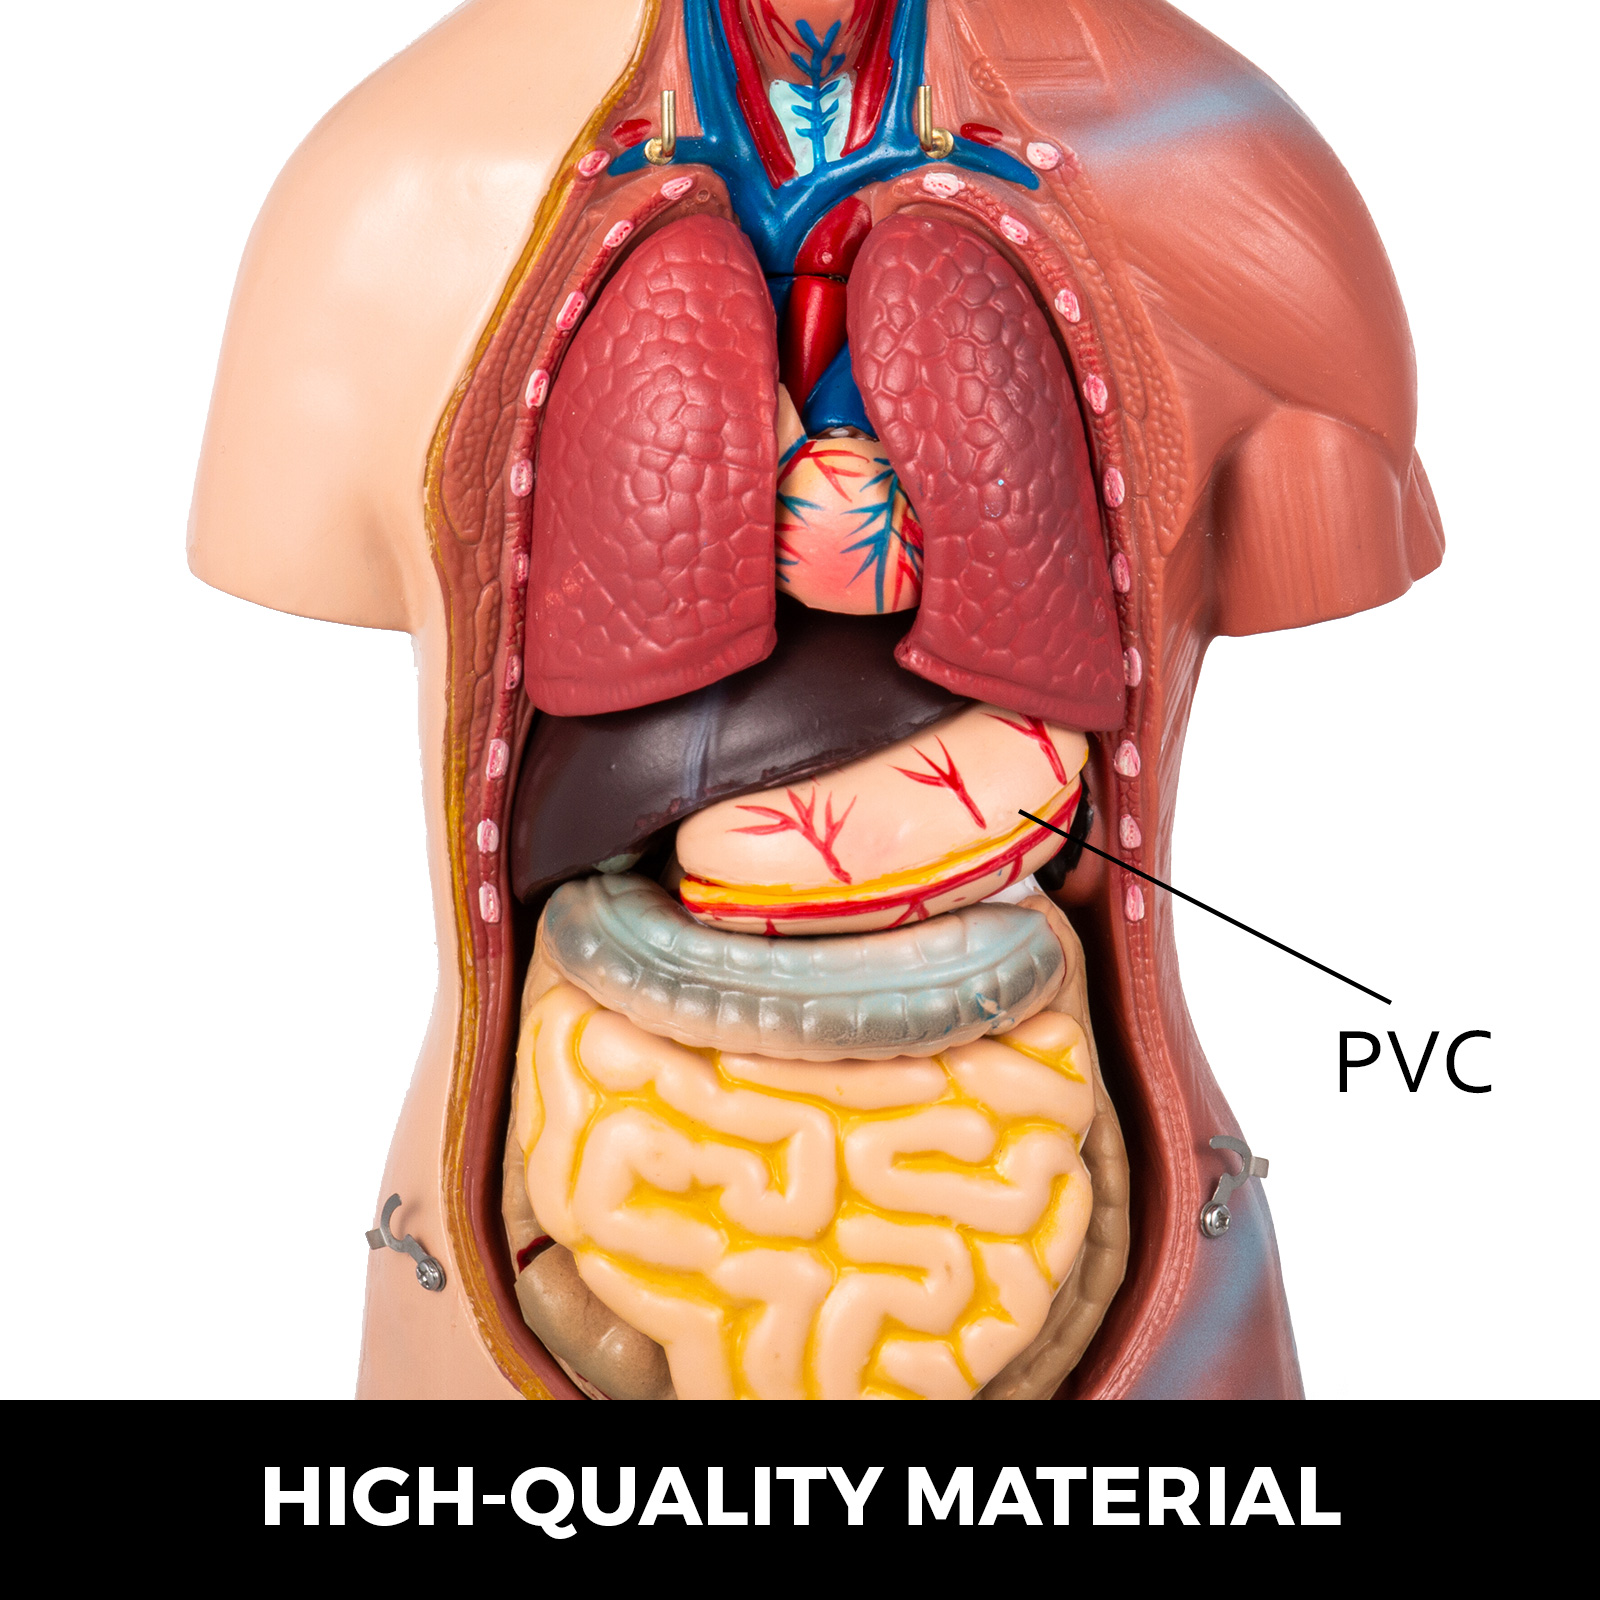 45cm Human Torso Organ Adult Male Tall Paul Anatomical Anatomy Teaching Model Ebay